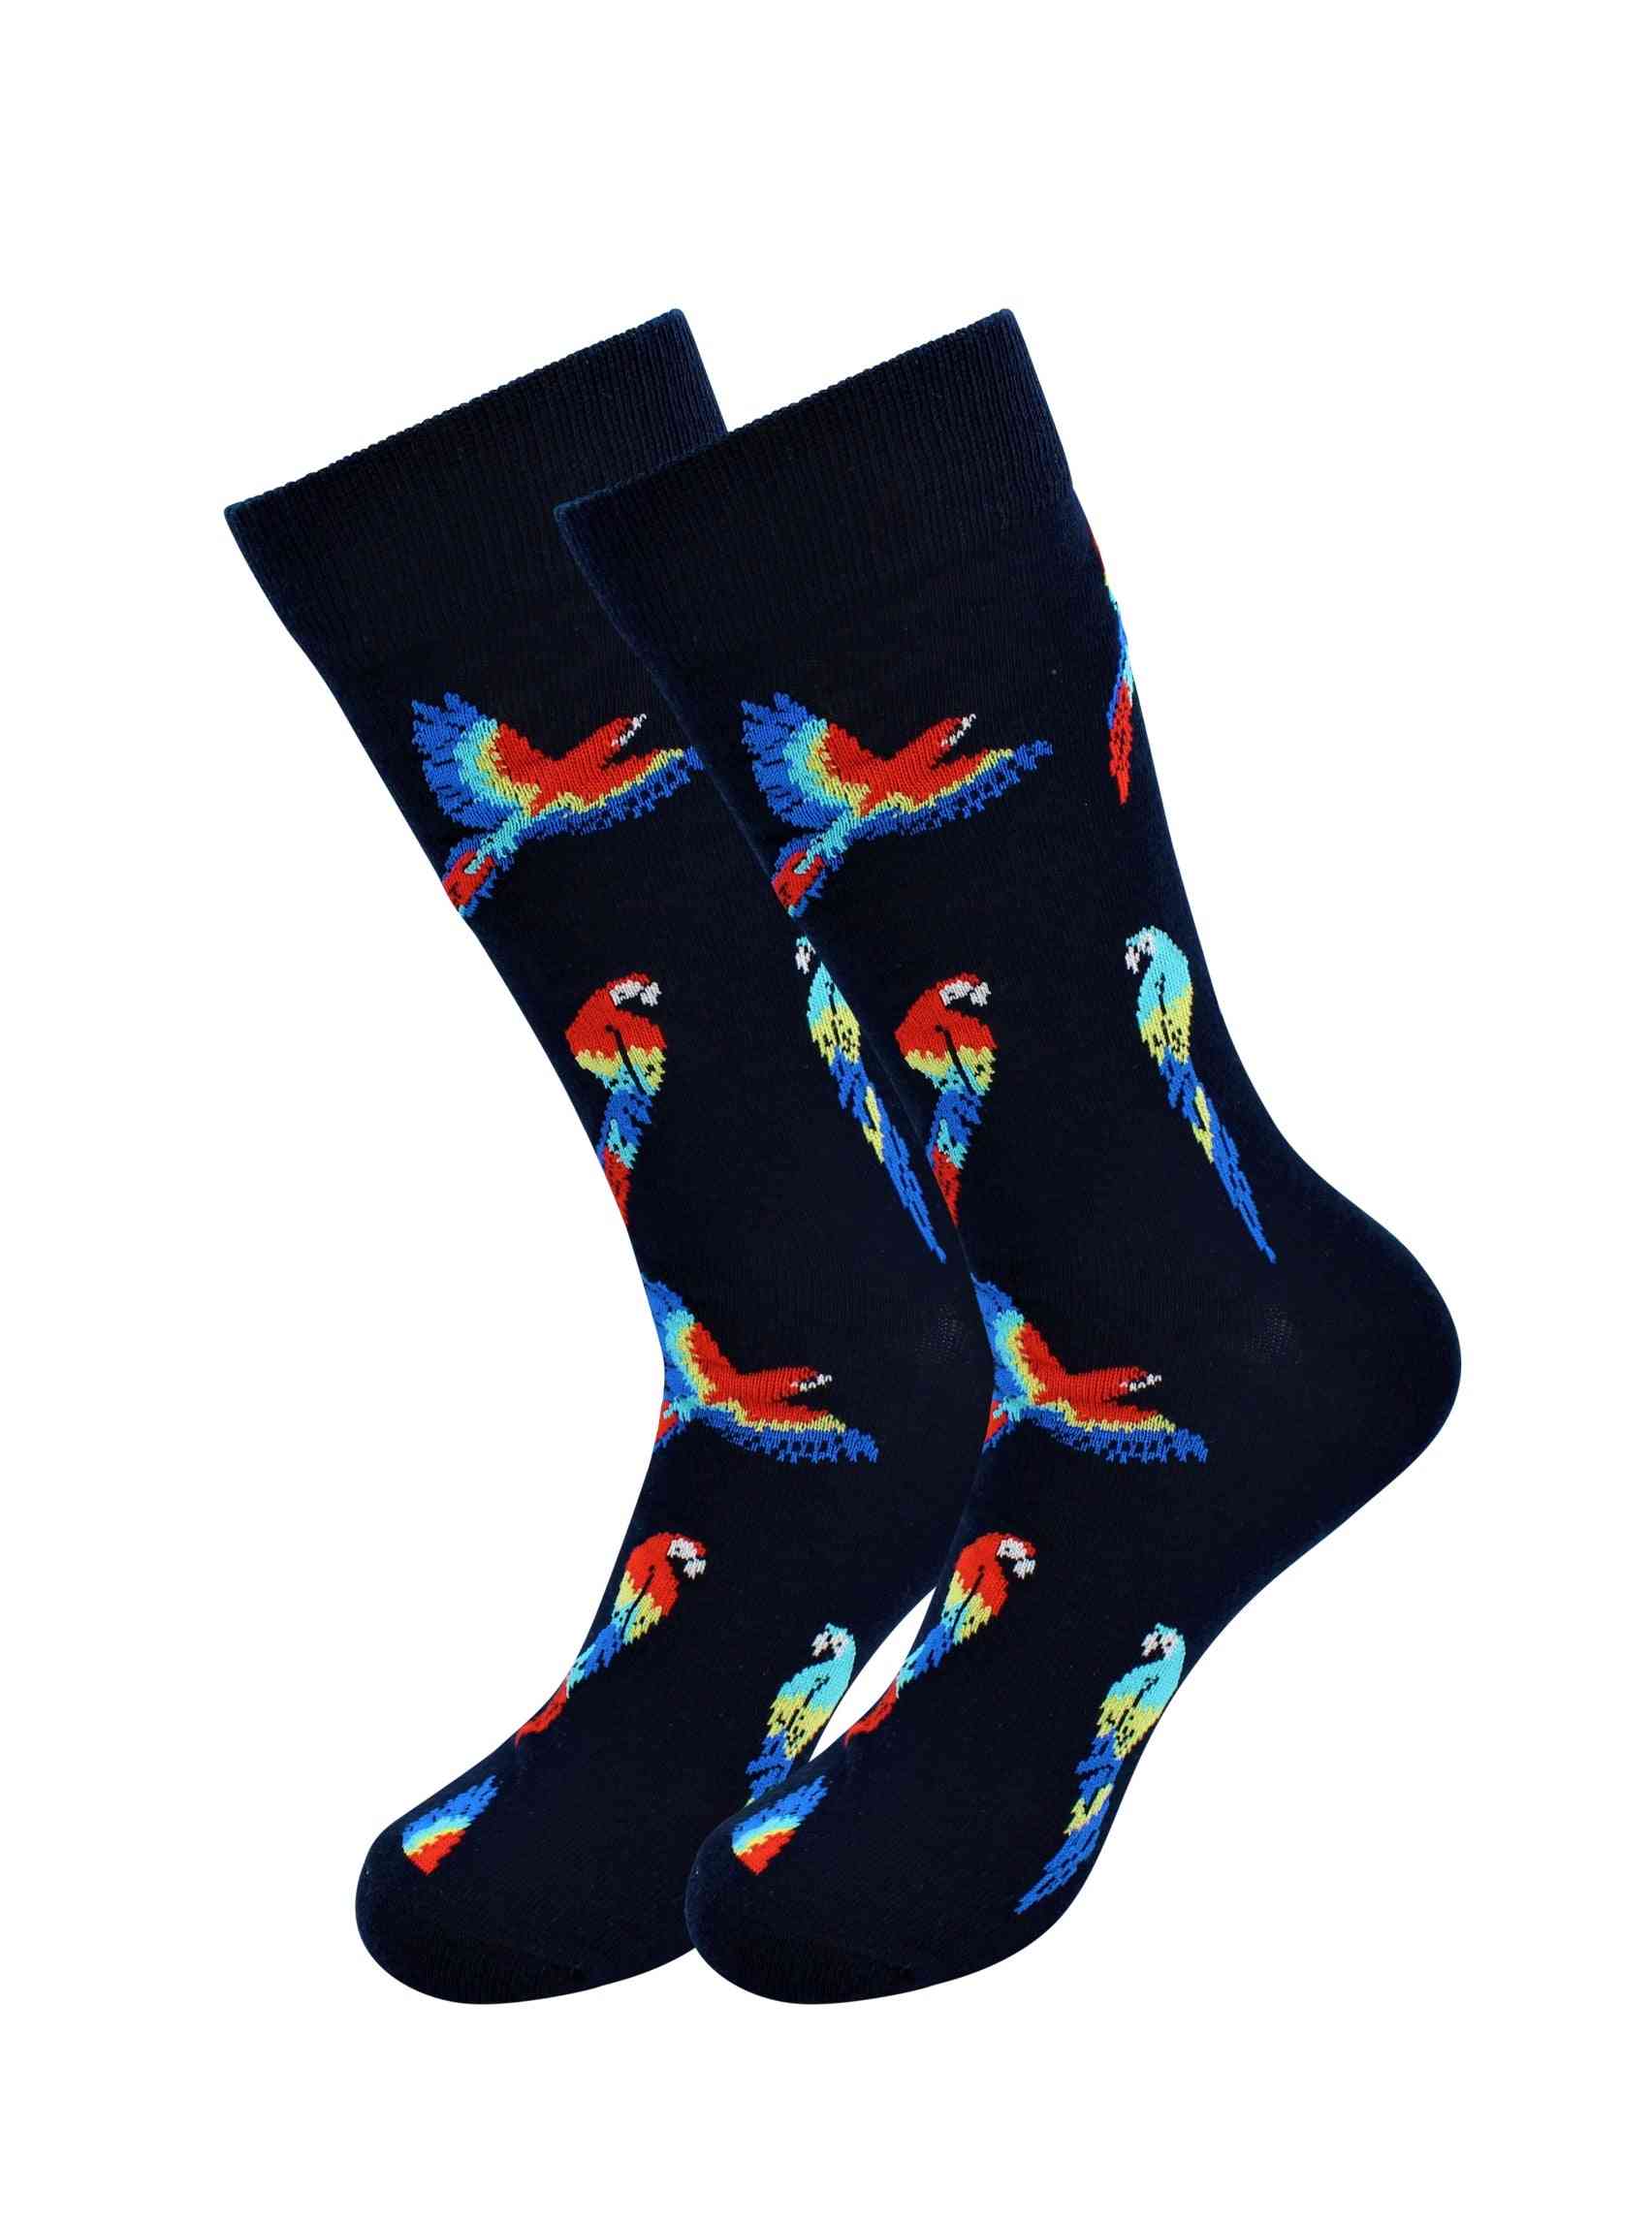 Sick Socks Parrots Designed's